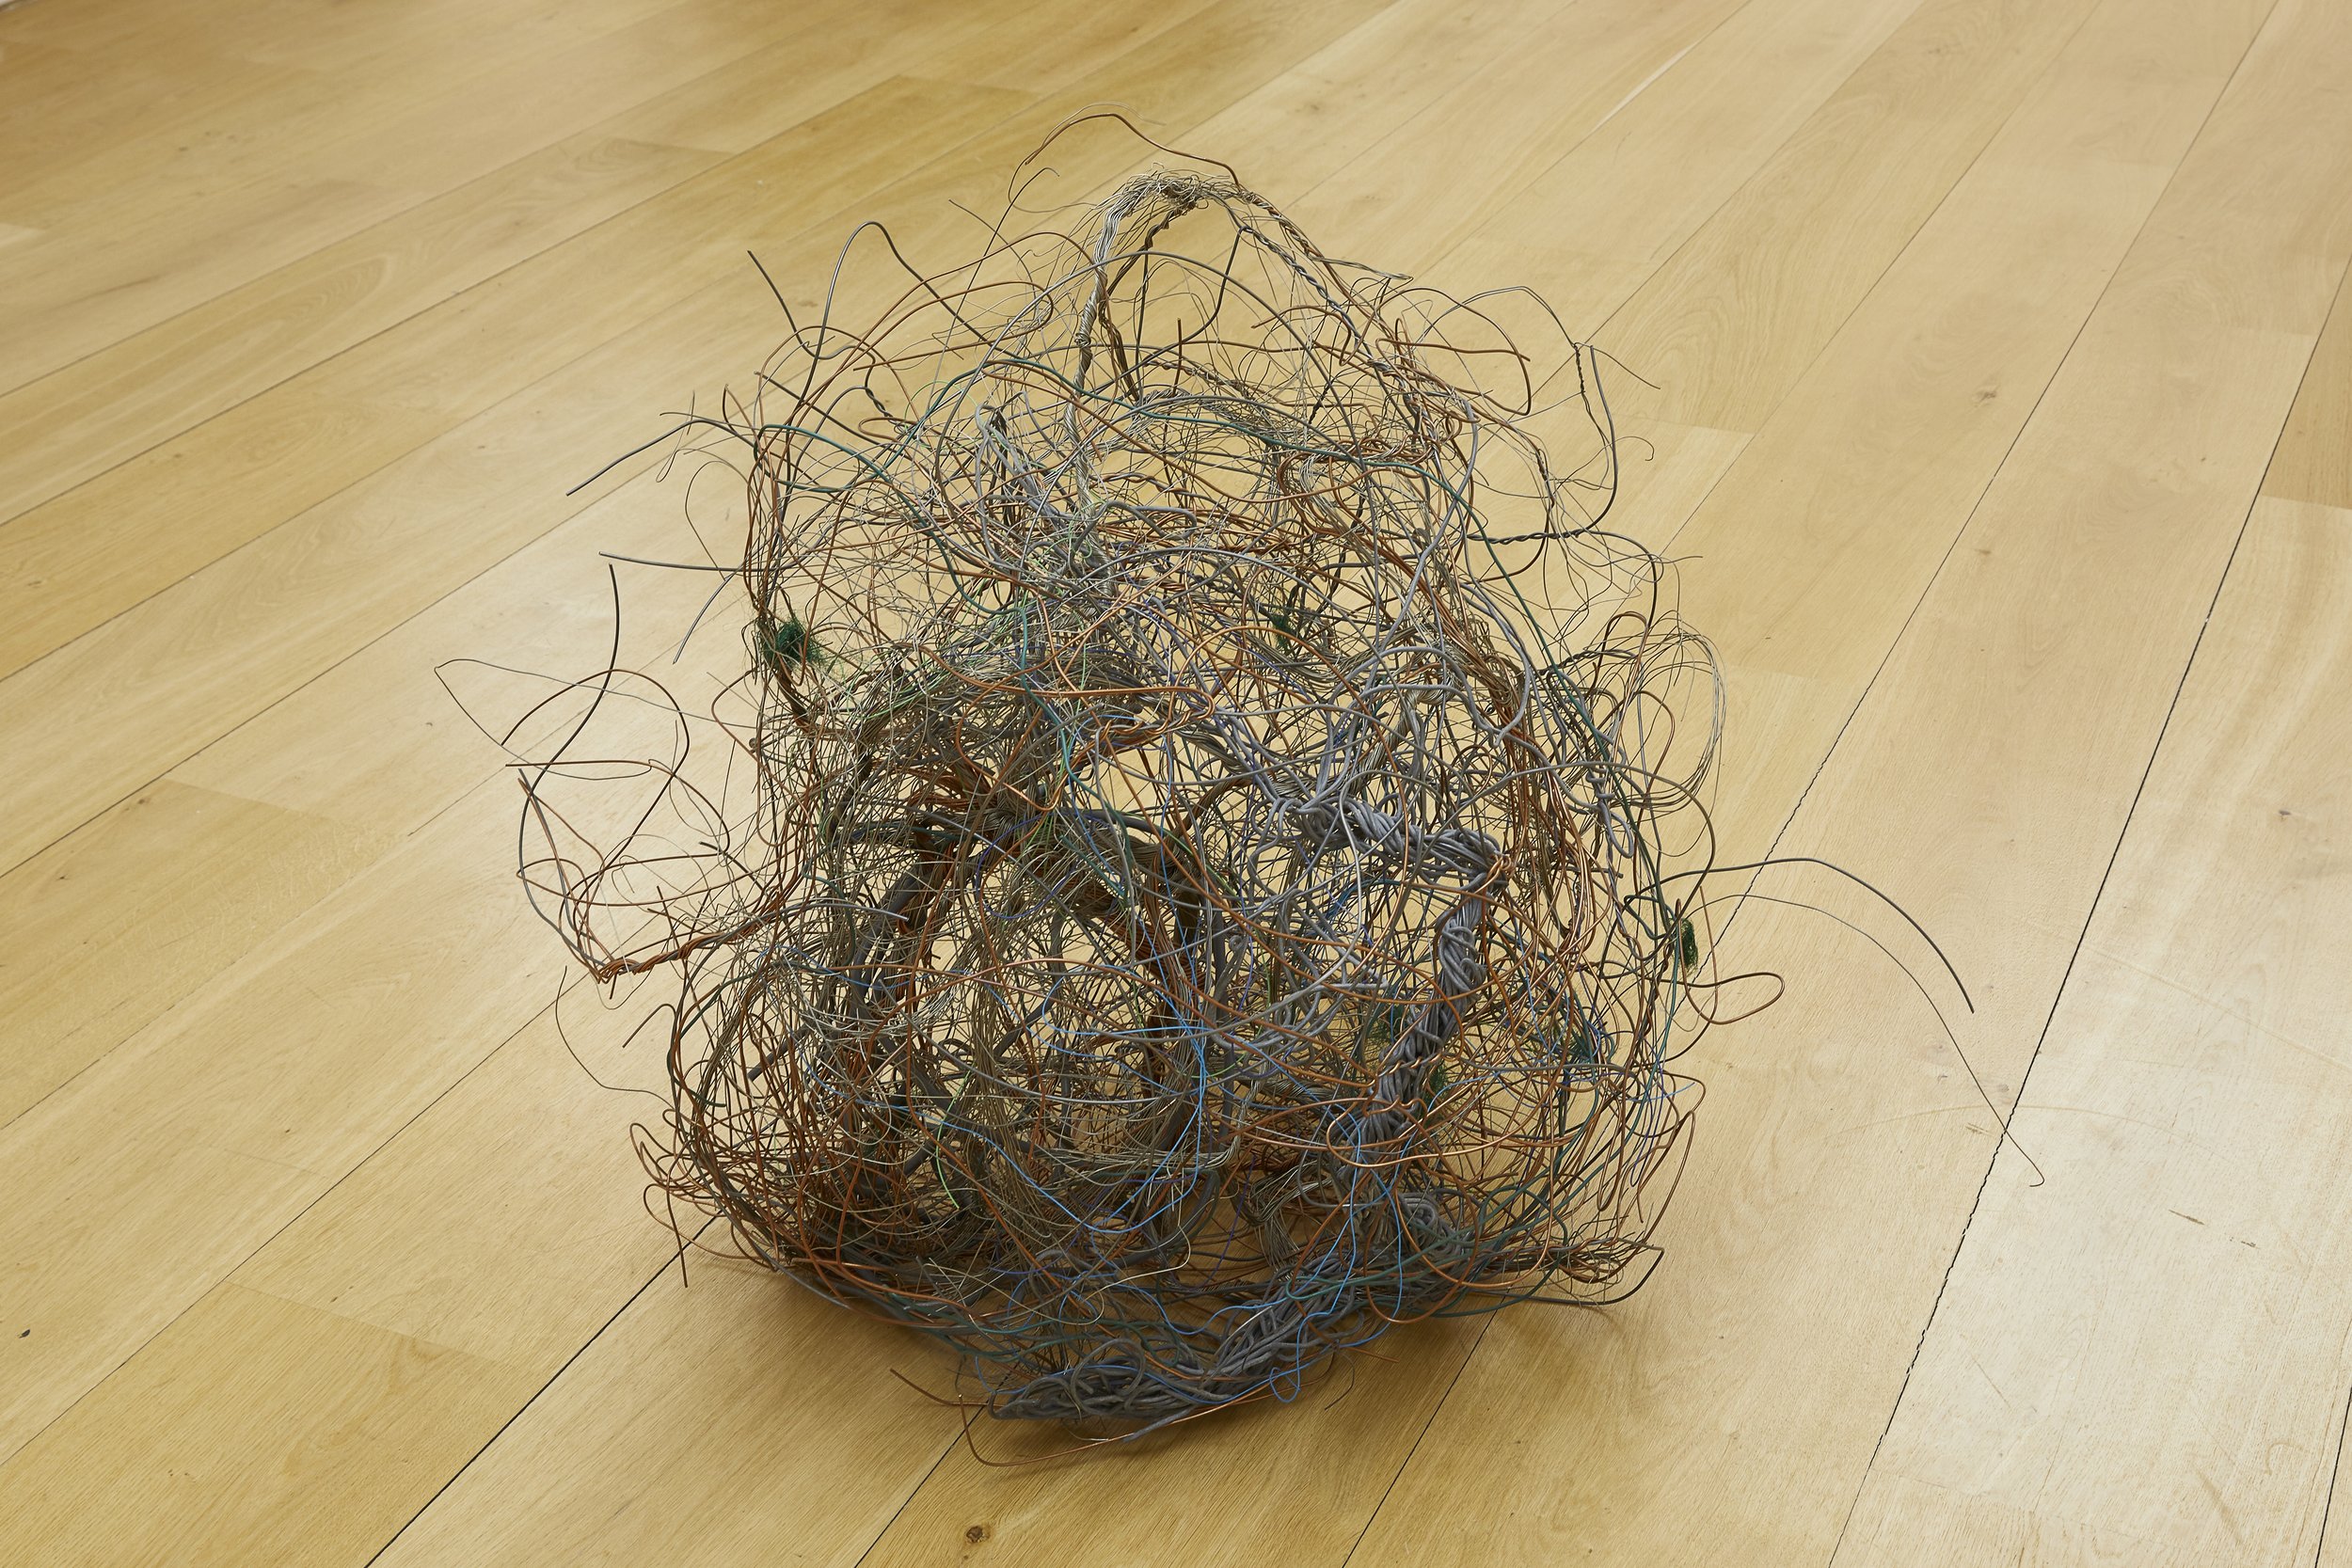  Alan Saret,  Untitled , 1969. Metal wire sculpture, 34 x 32 x 32 inches. 